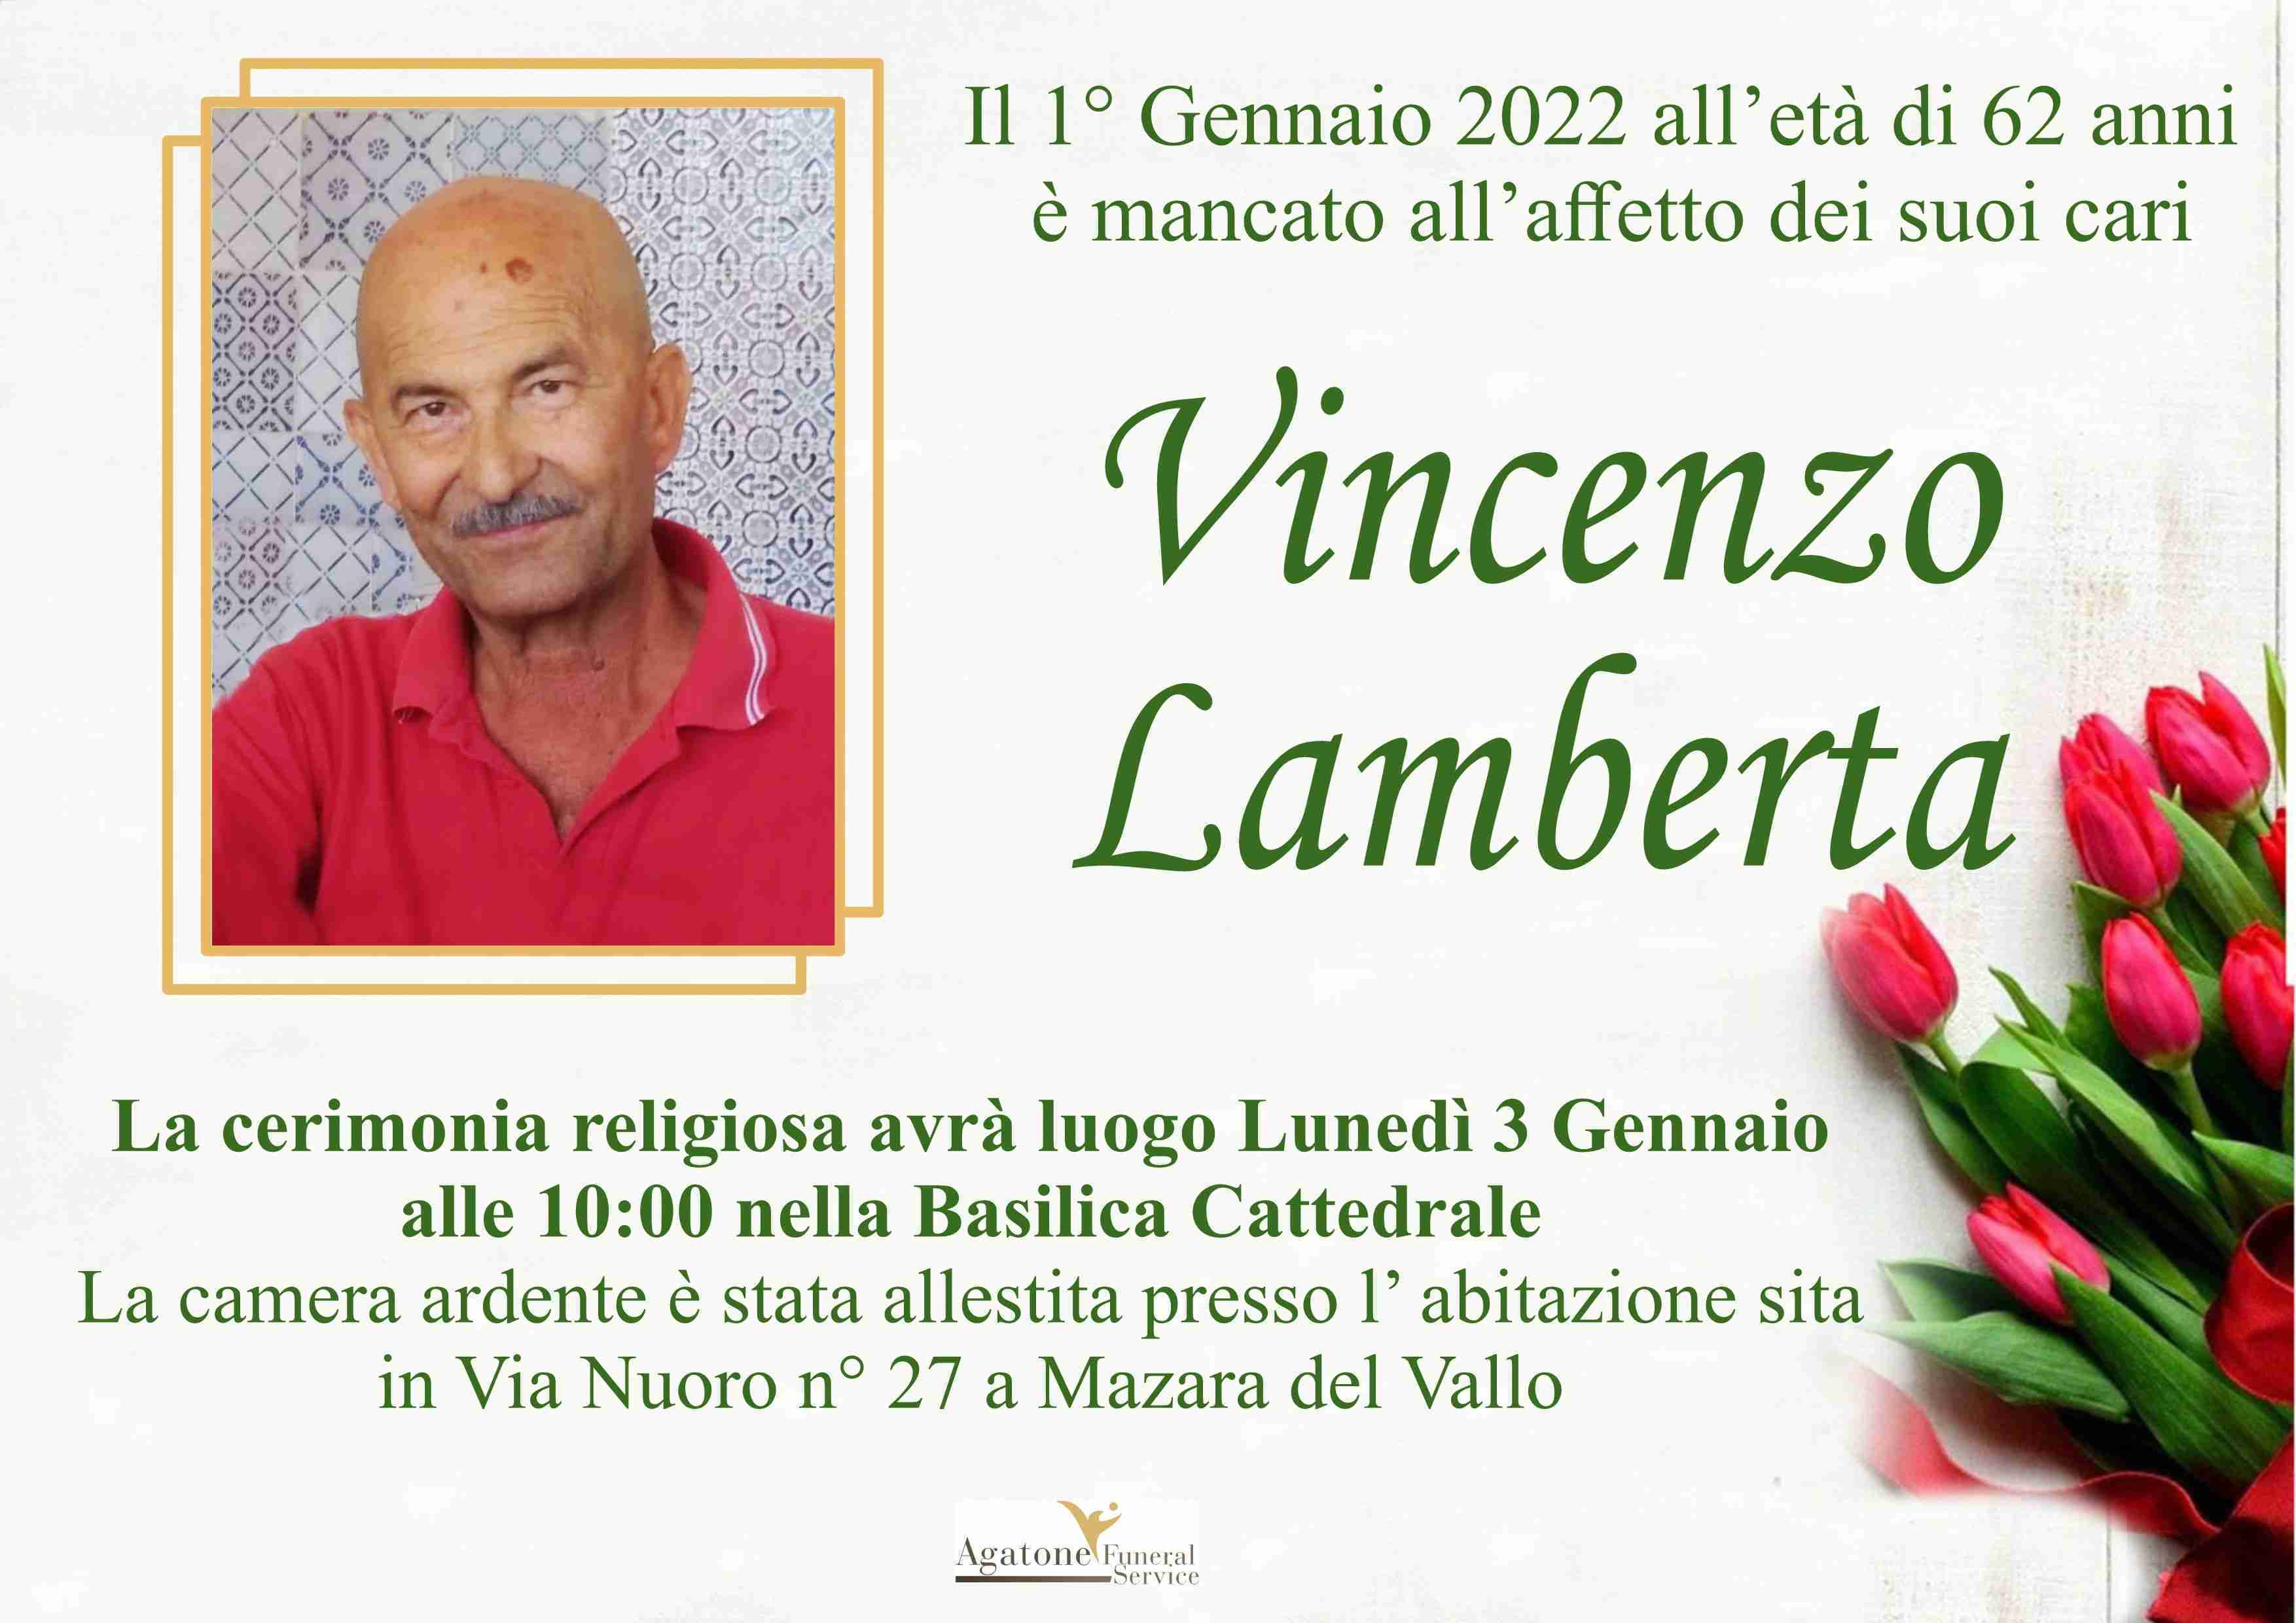 Vincenzo Lamberta